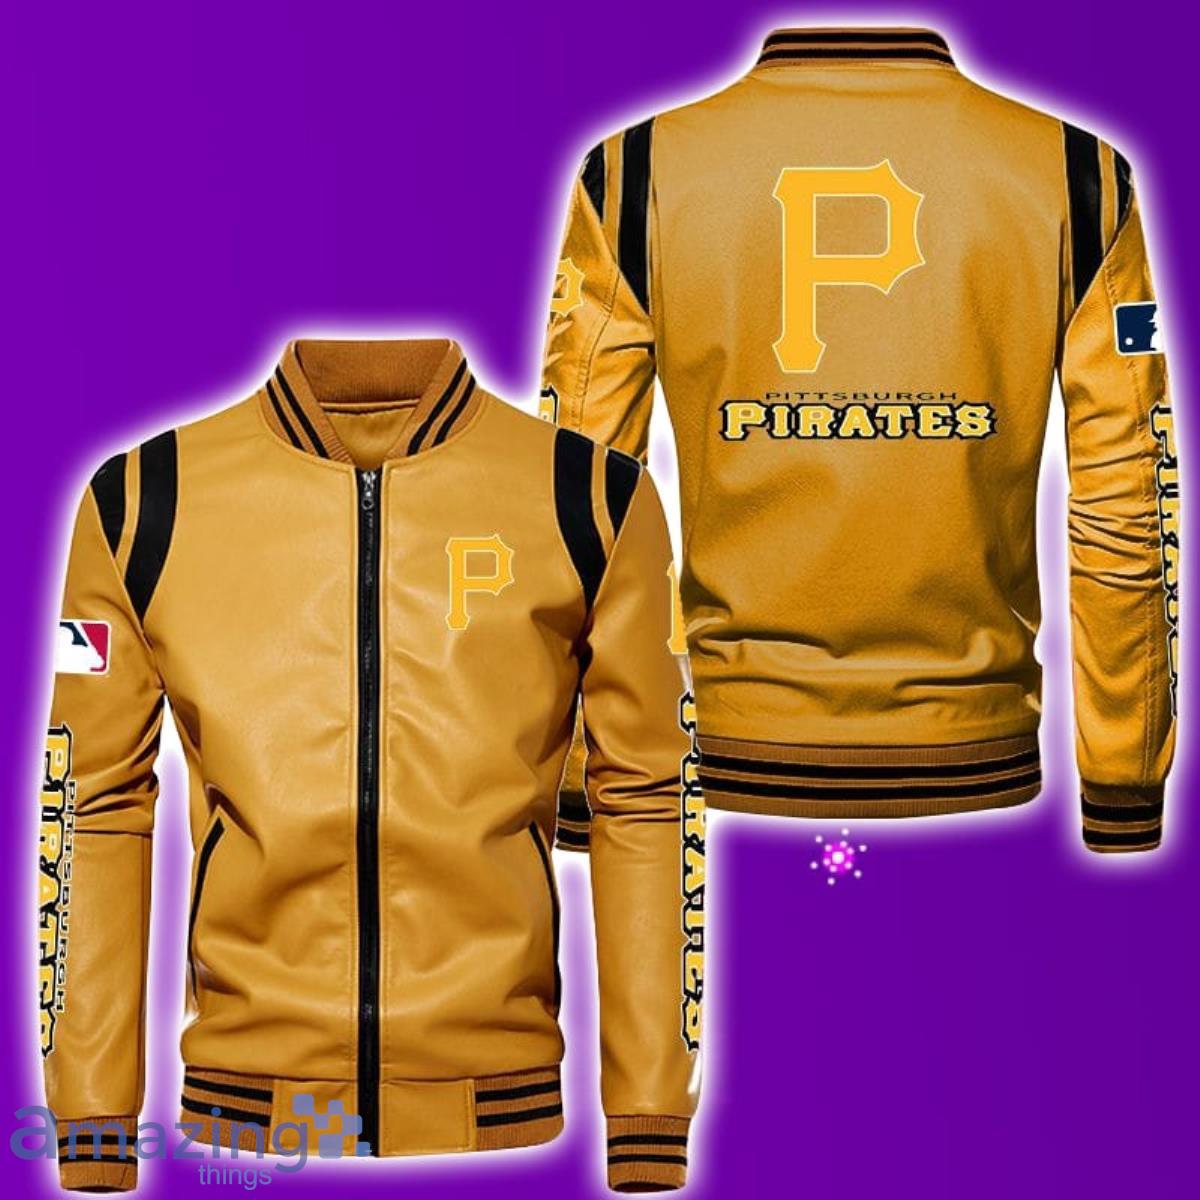 Pittsburgh Pirates Summer Break Vest - Mens